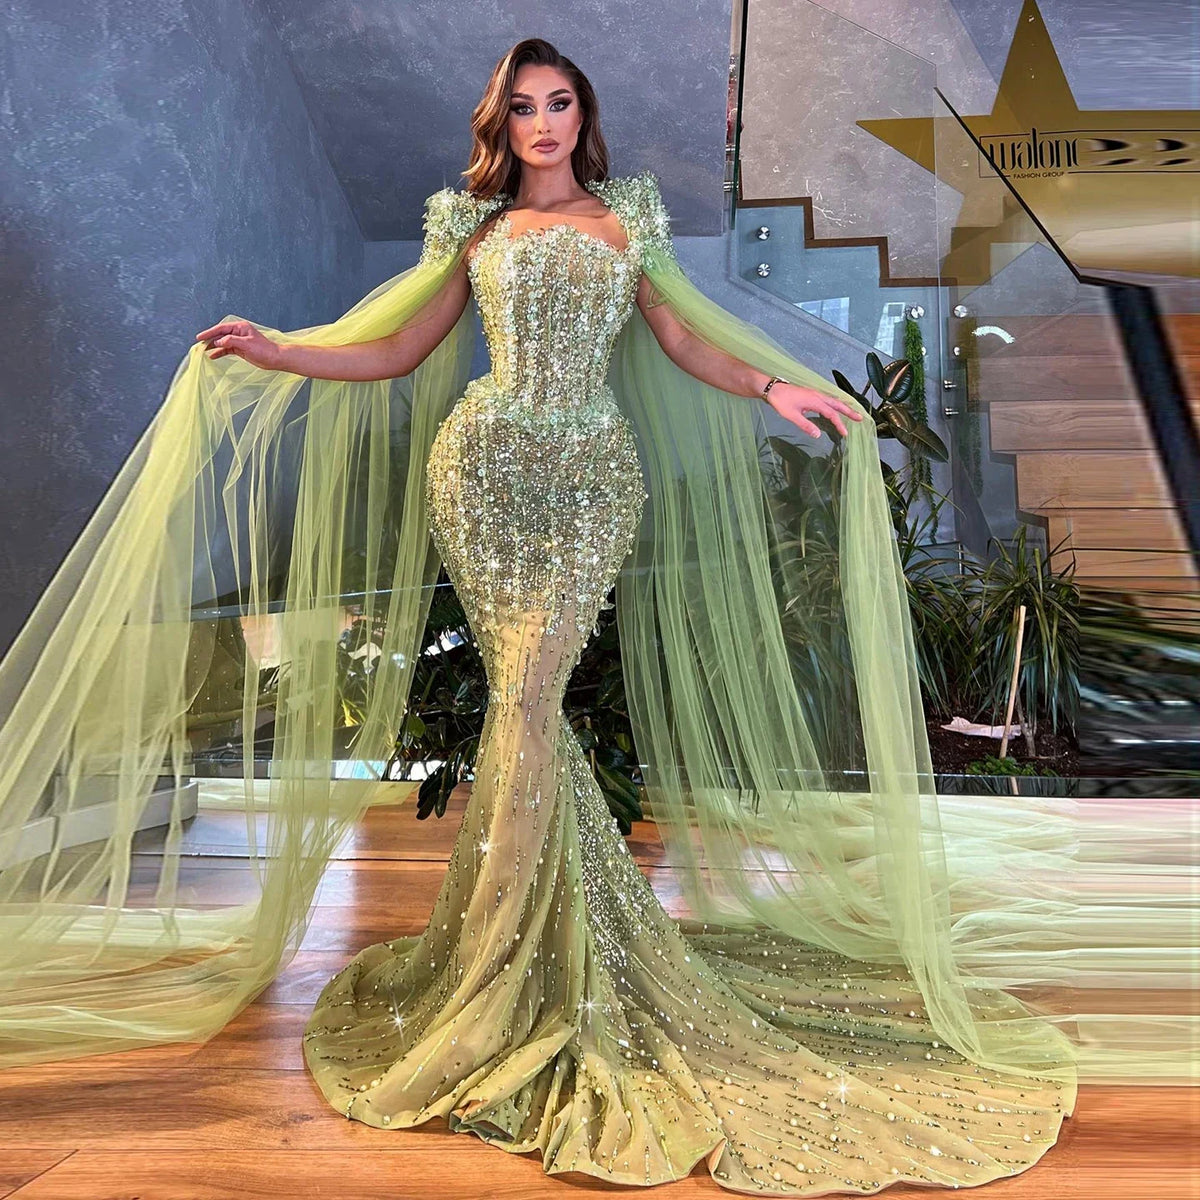 Sharon Said Luxury Beaded Mermaid Lime Green Evening Dress with Cape Sleeves Elegant Arabic Women Wedding Party Prom Dress SS443